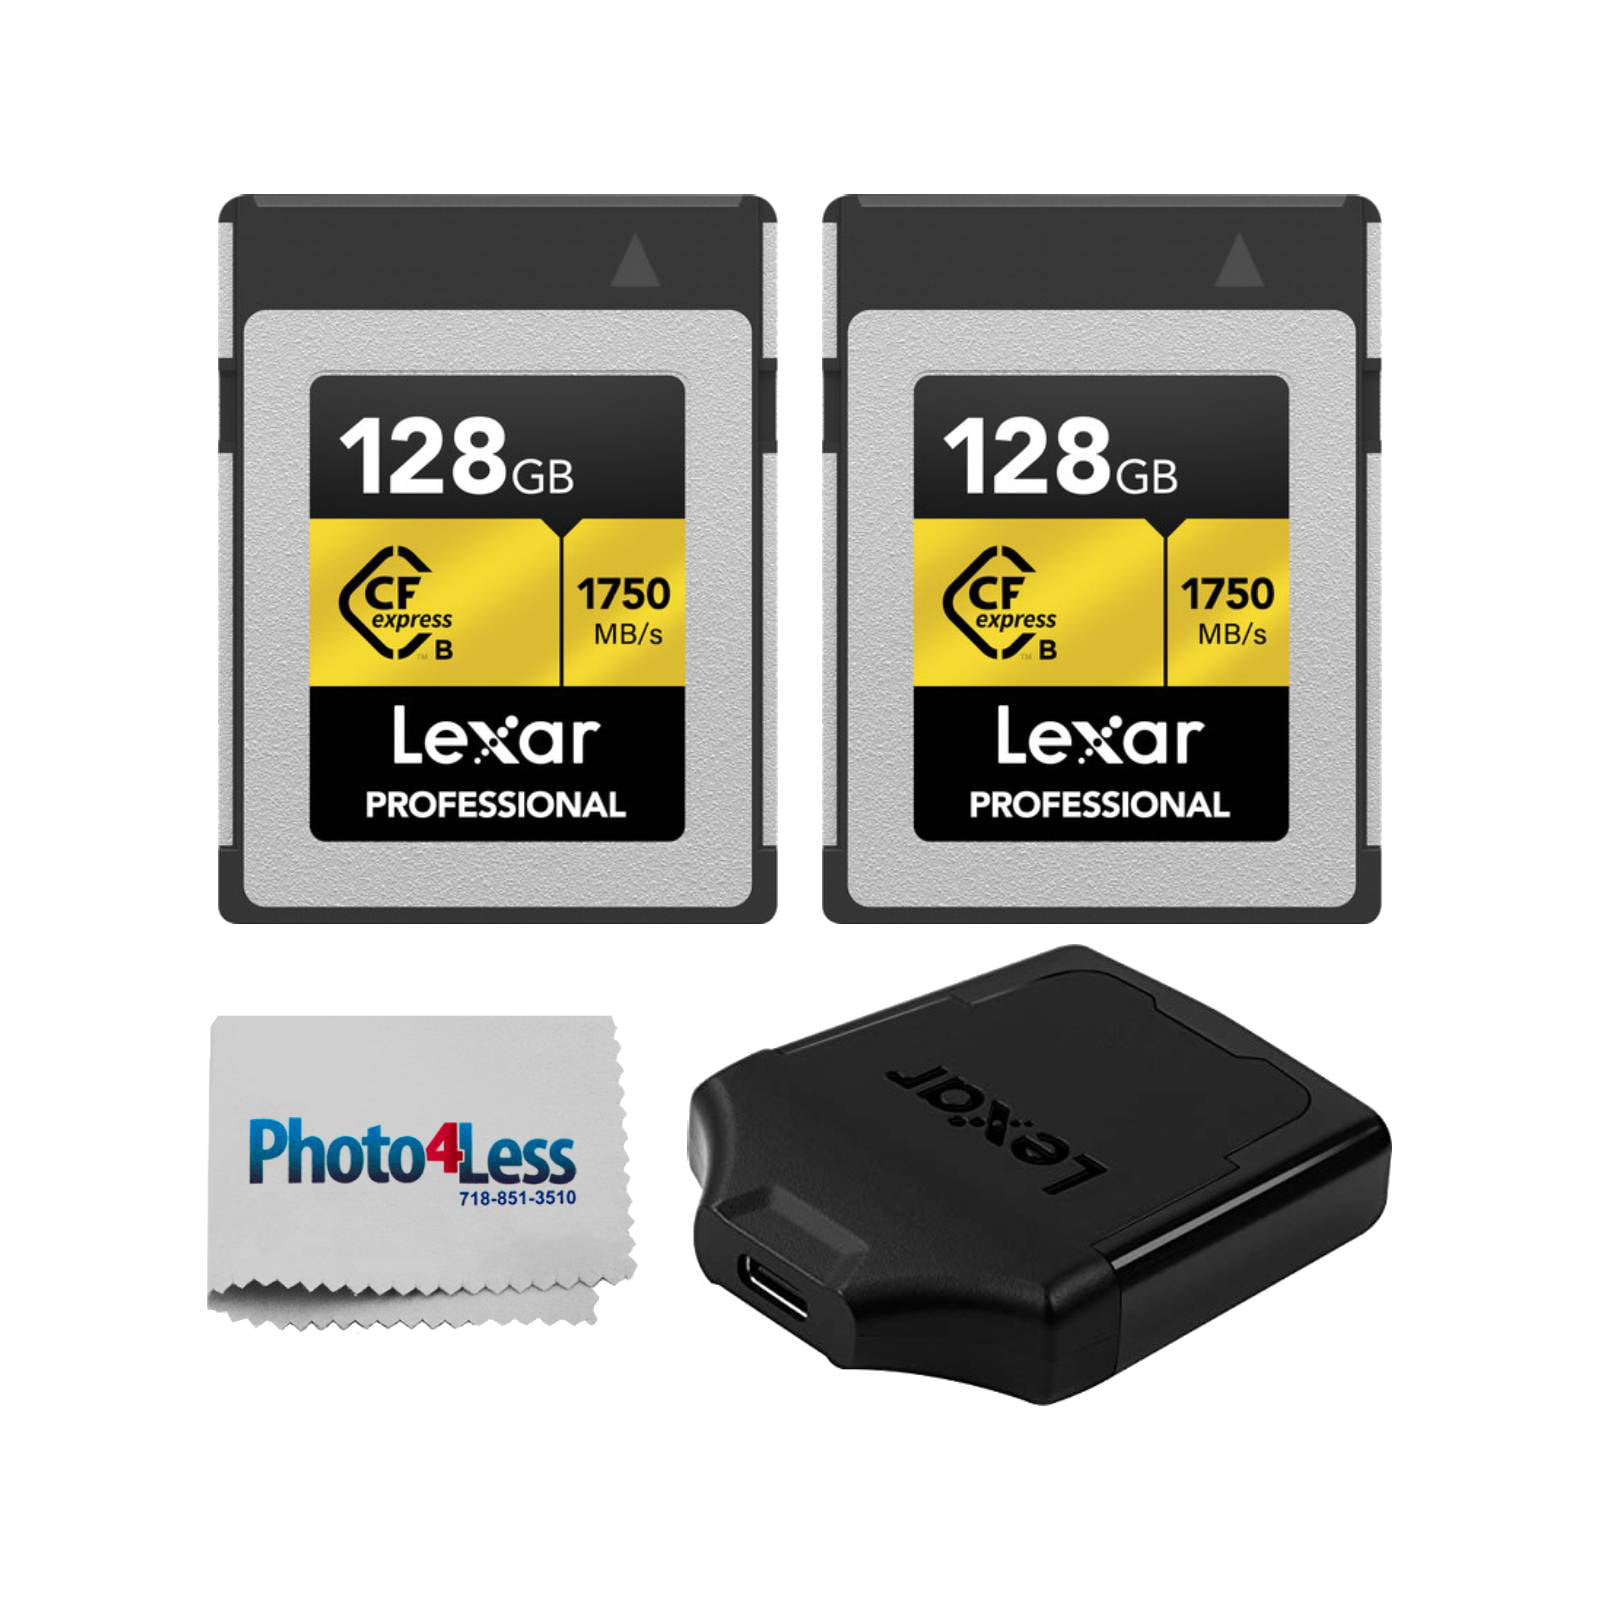 2 Lexar 128GB Professional CFexpress Type-B Memory Cards + More